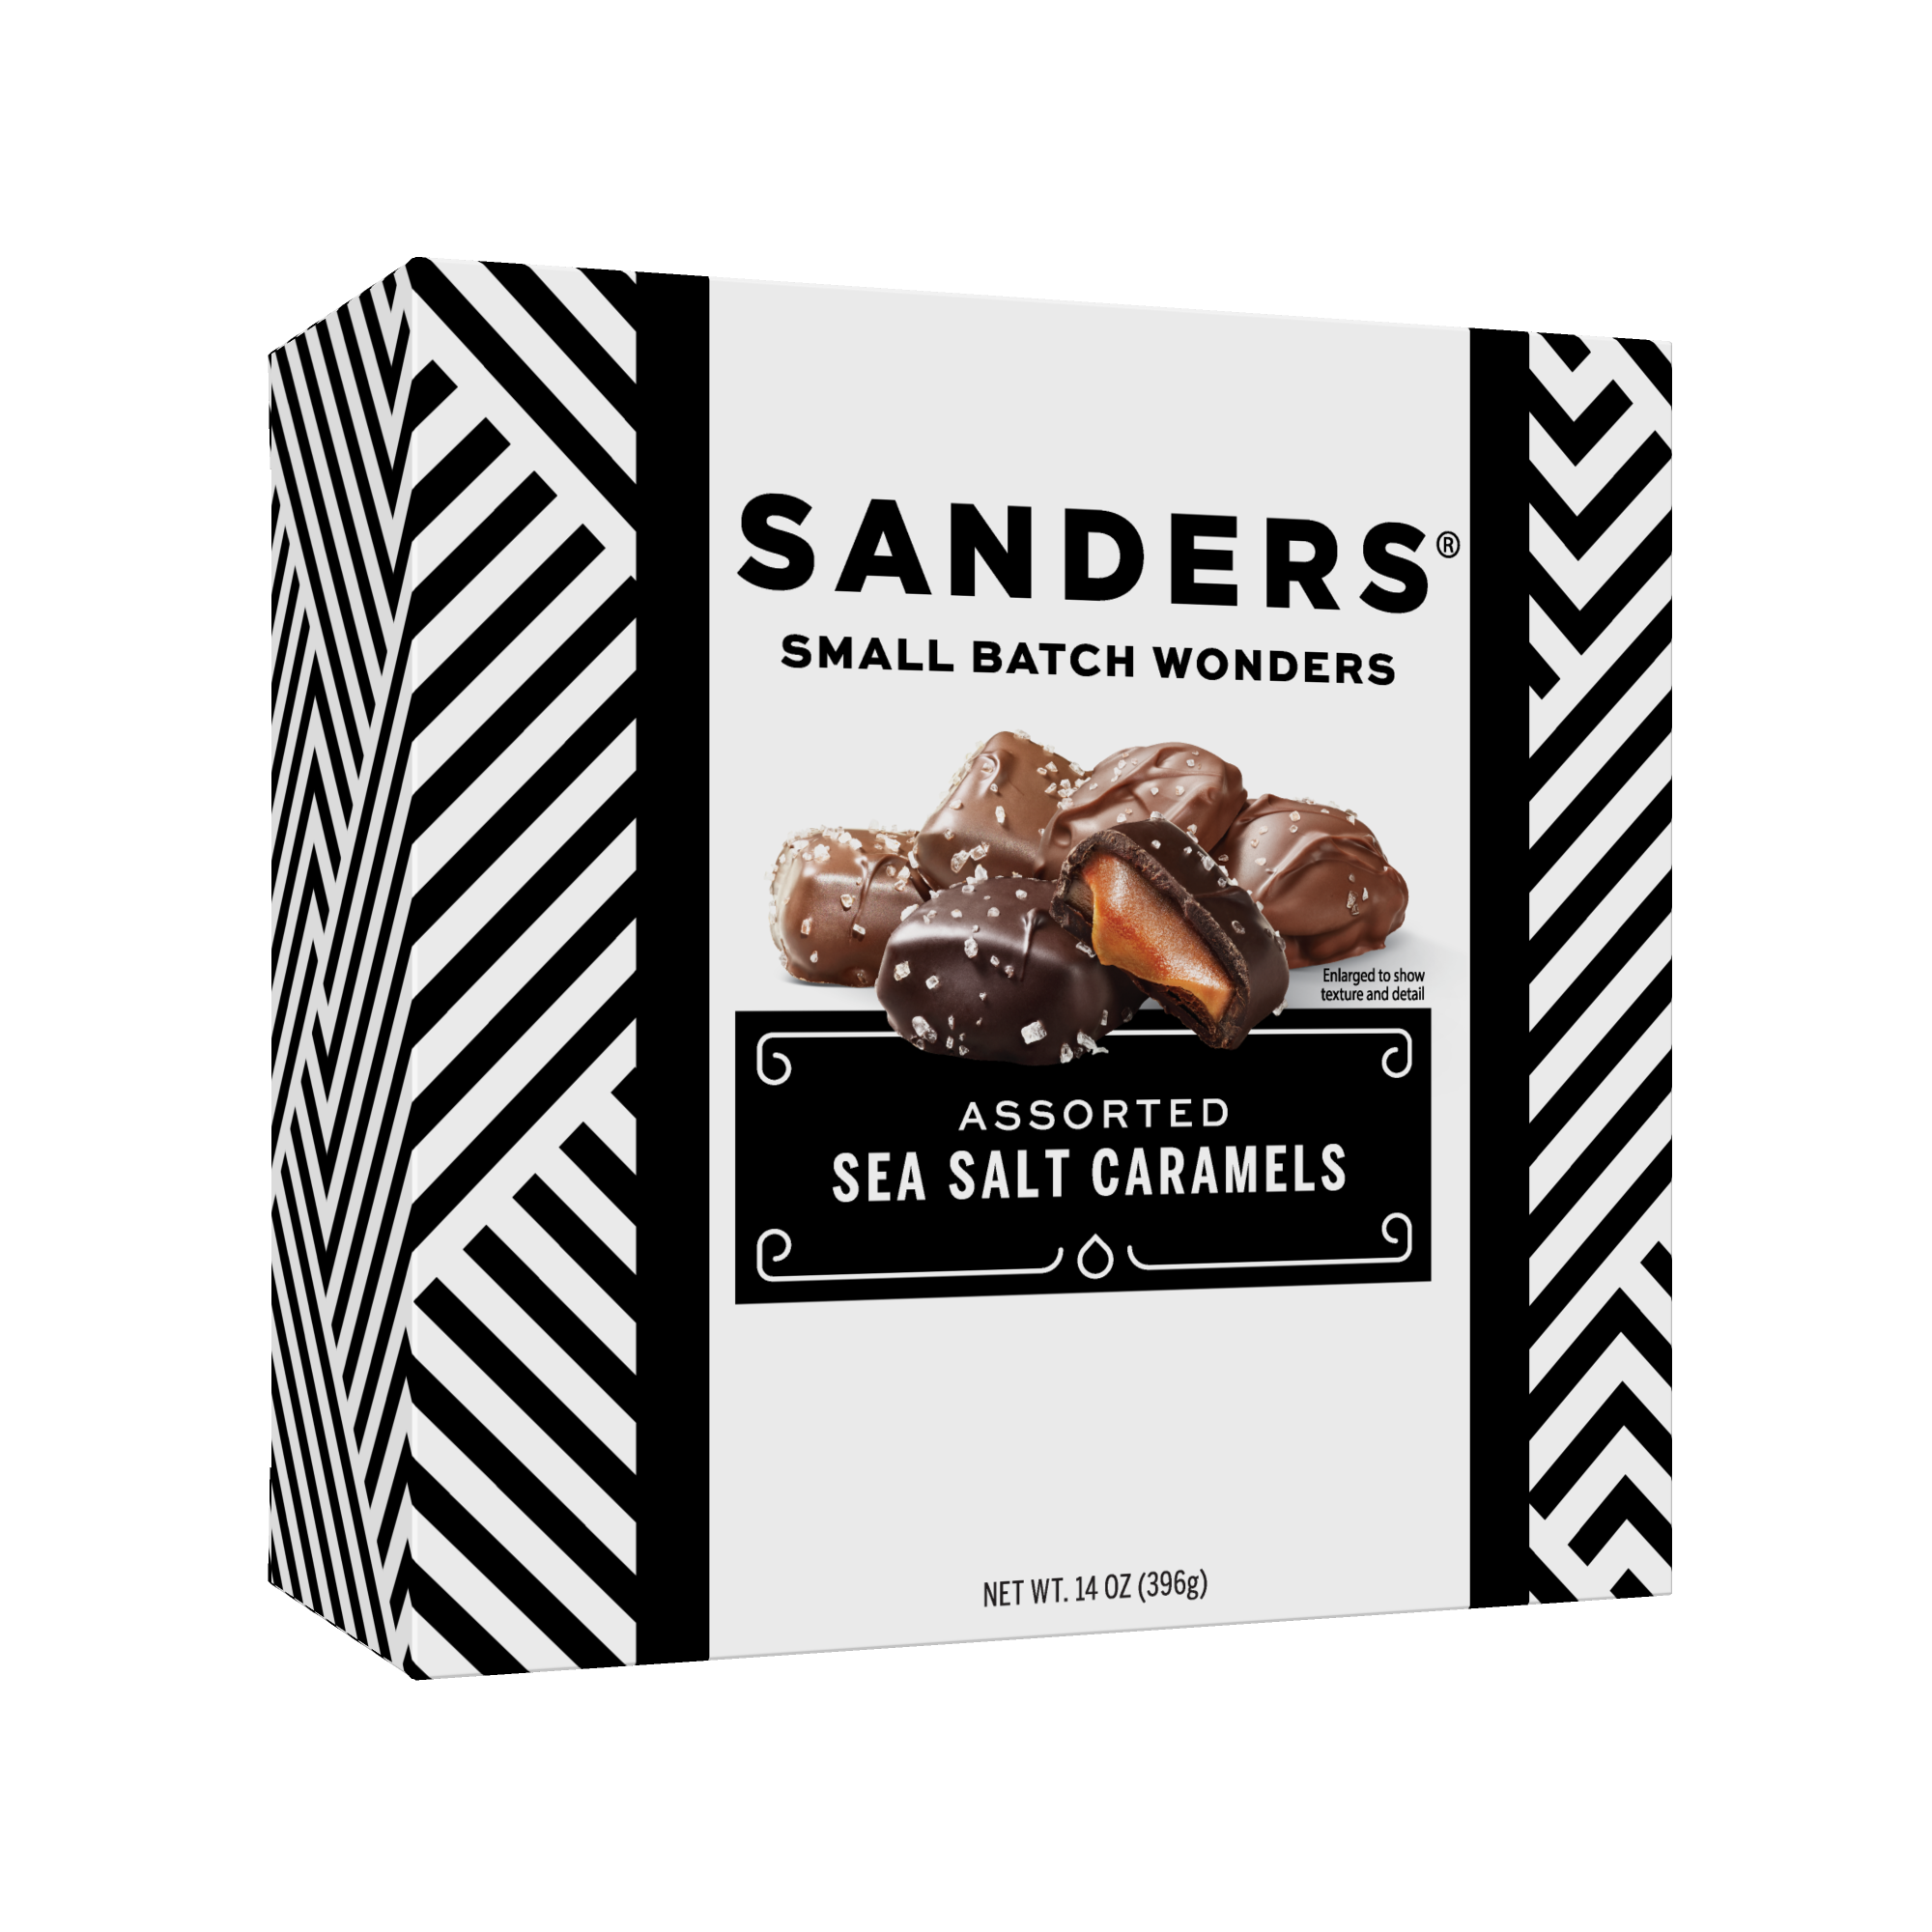 Sea Salt Caramel Chocolate Bar